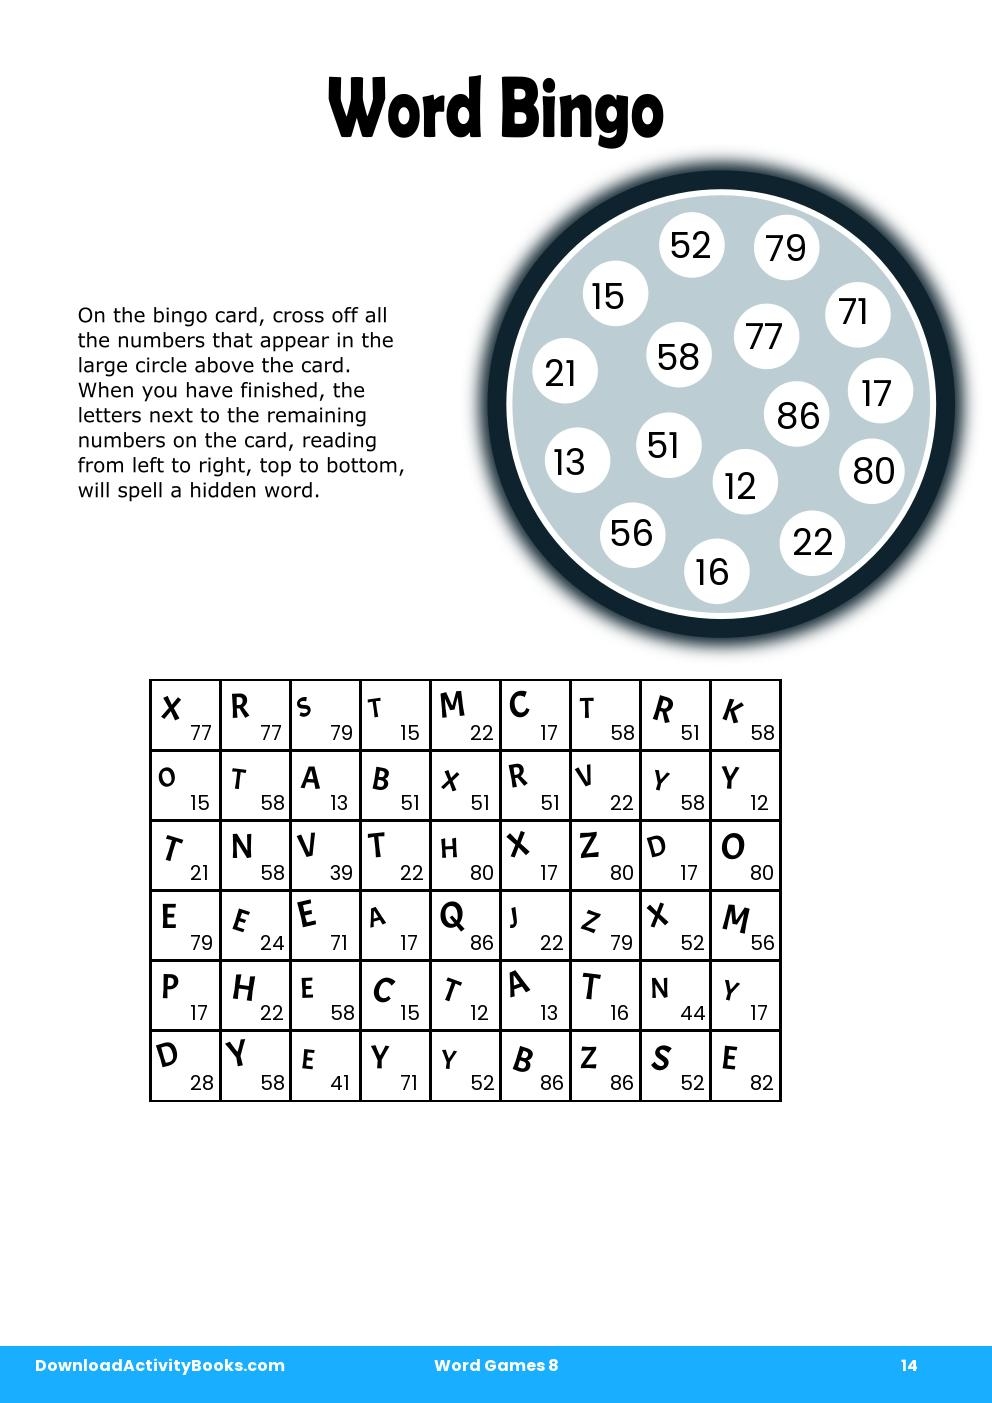 Word Bingo in Word Games 8